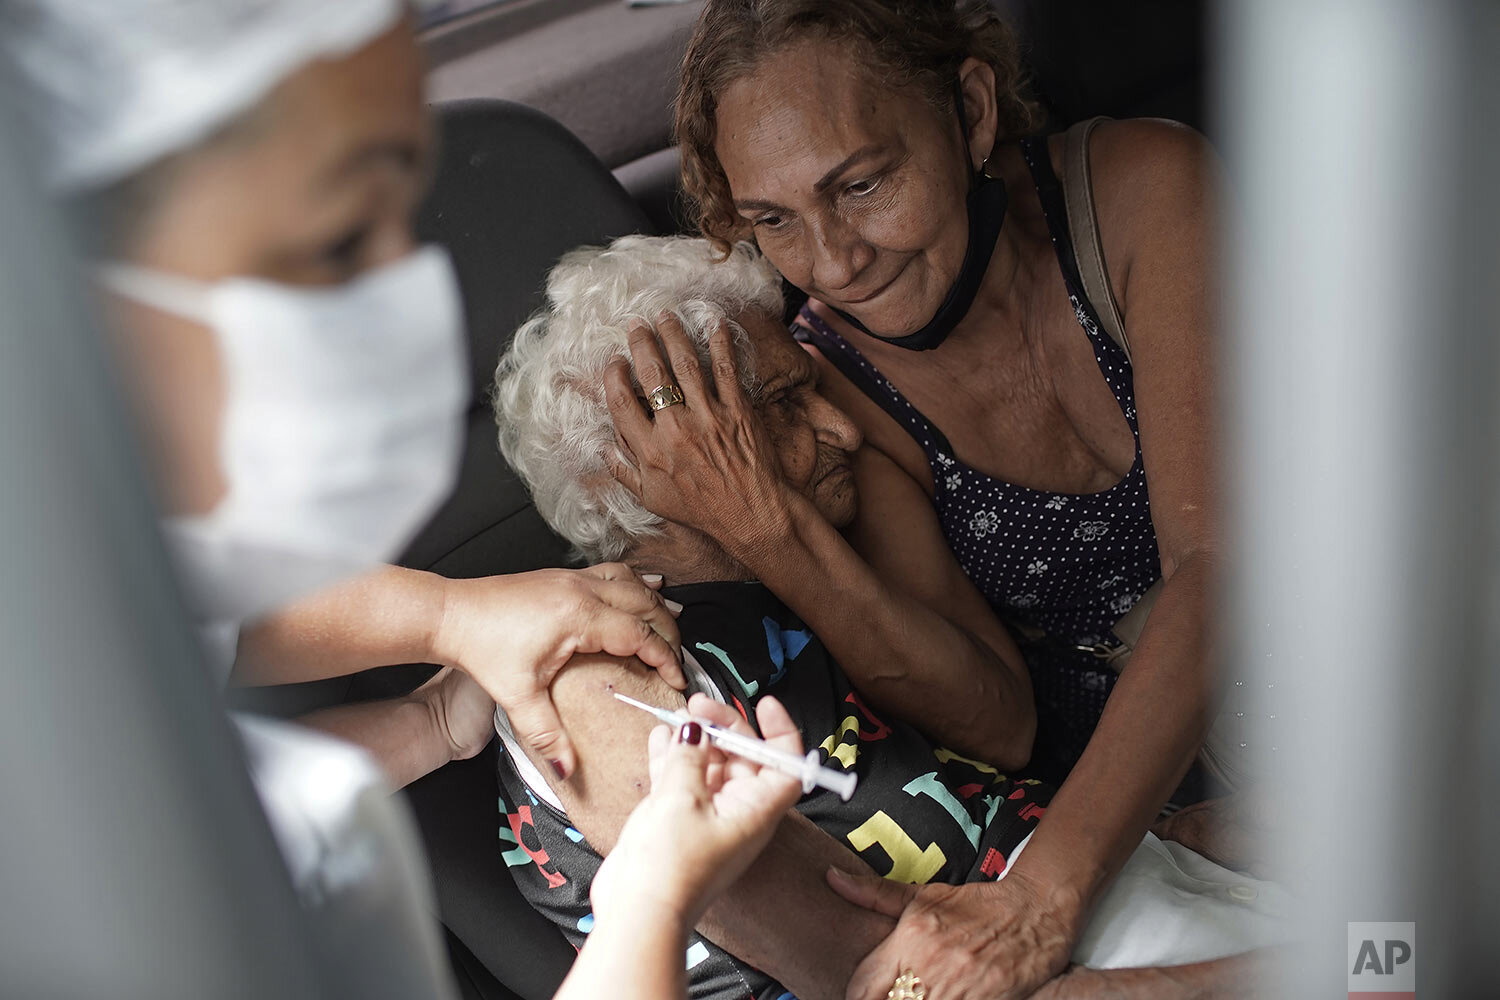  An elderly woman gets a shot of China's Sinovac vaccine as part of a priority COVID-19 vaccination program for the elderly at a drive-thru vaccination center in Rio de Janeiro, Brazil, Feb. 1, 2021. (AP Photo/Silvia Izquierdo) 